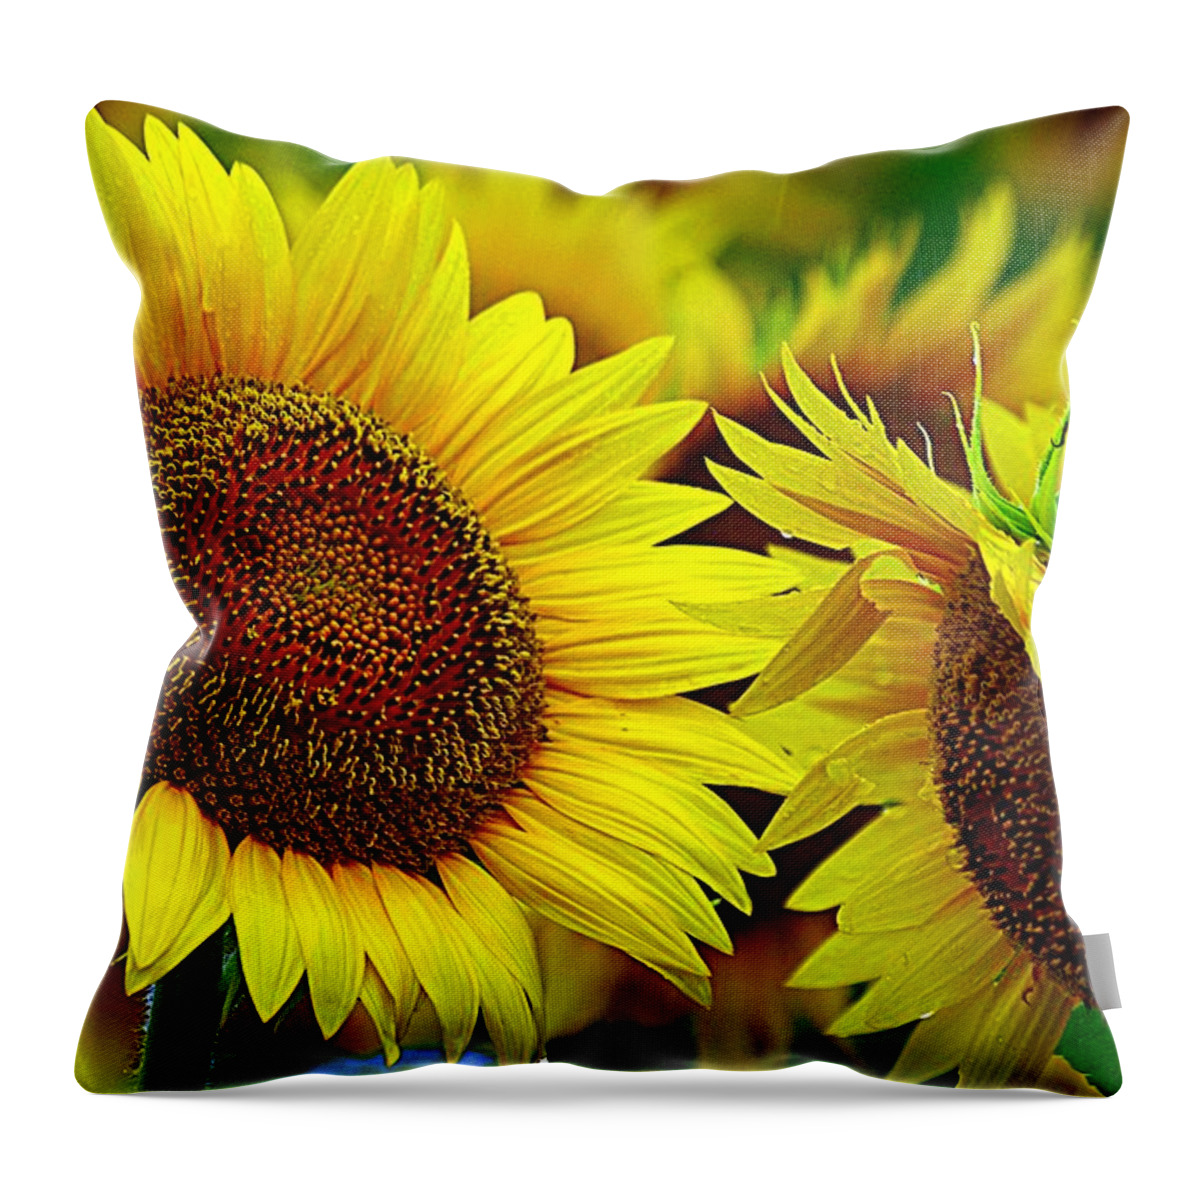 Golden Sunflowers Throw Pillow featuring the photograph Bright Days Ahead by Karen McKenzie McAdoo